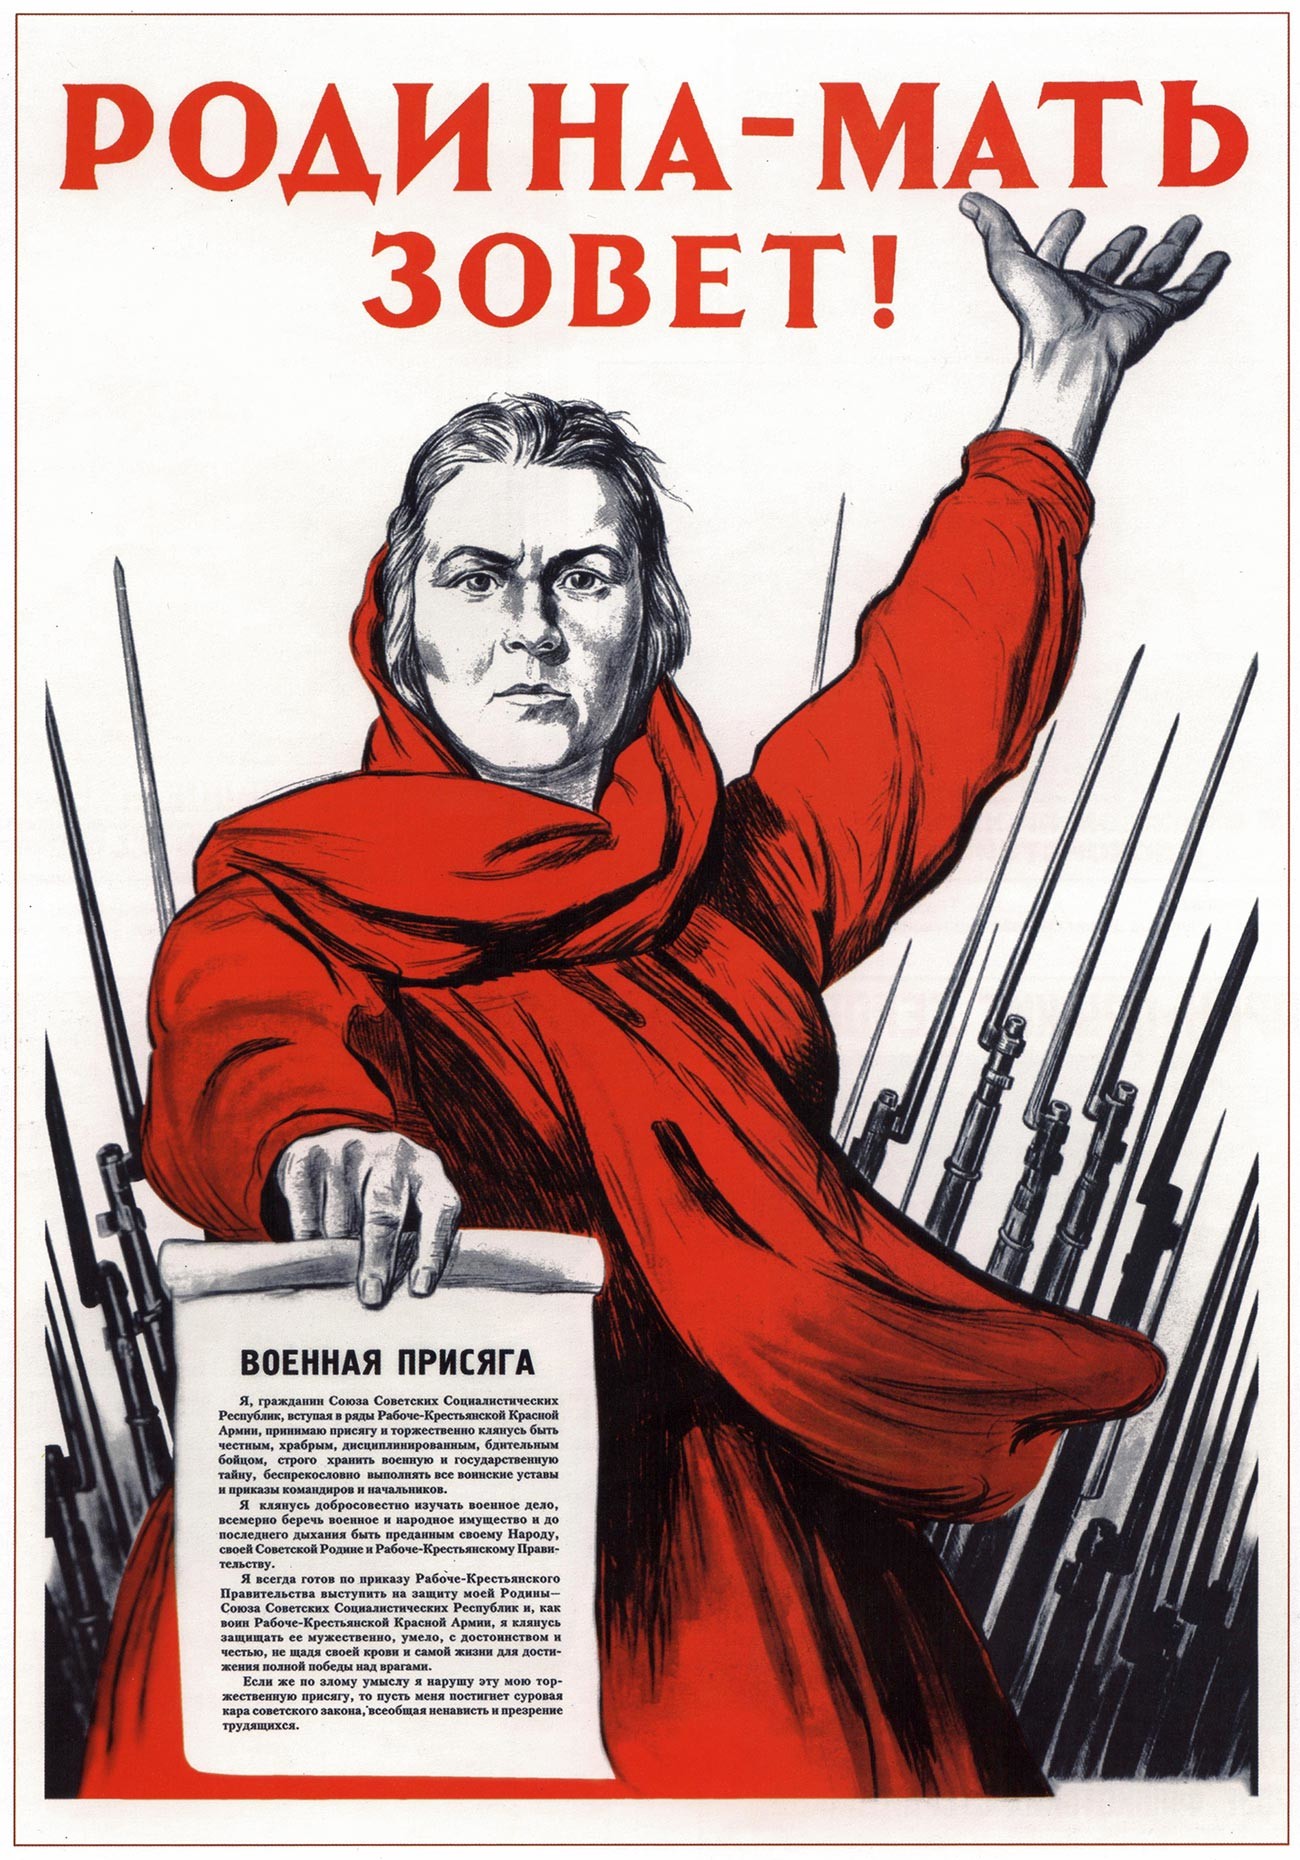 'The Motherland Calls' Soviet poster, 1941